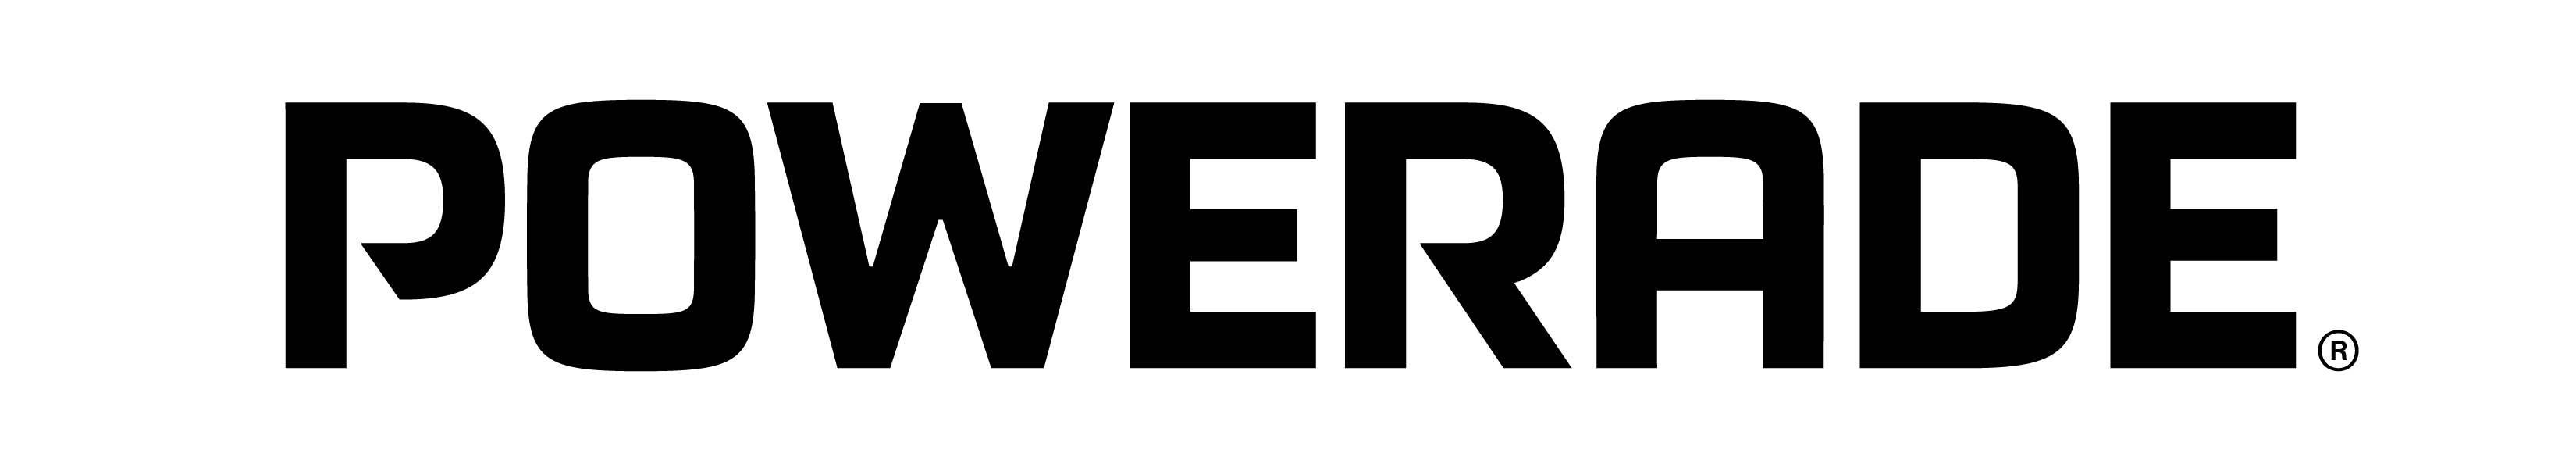 POWERADE Logo